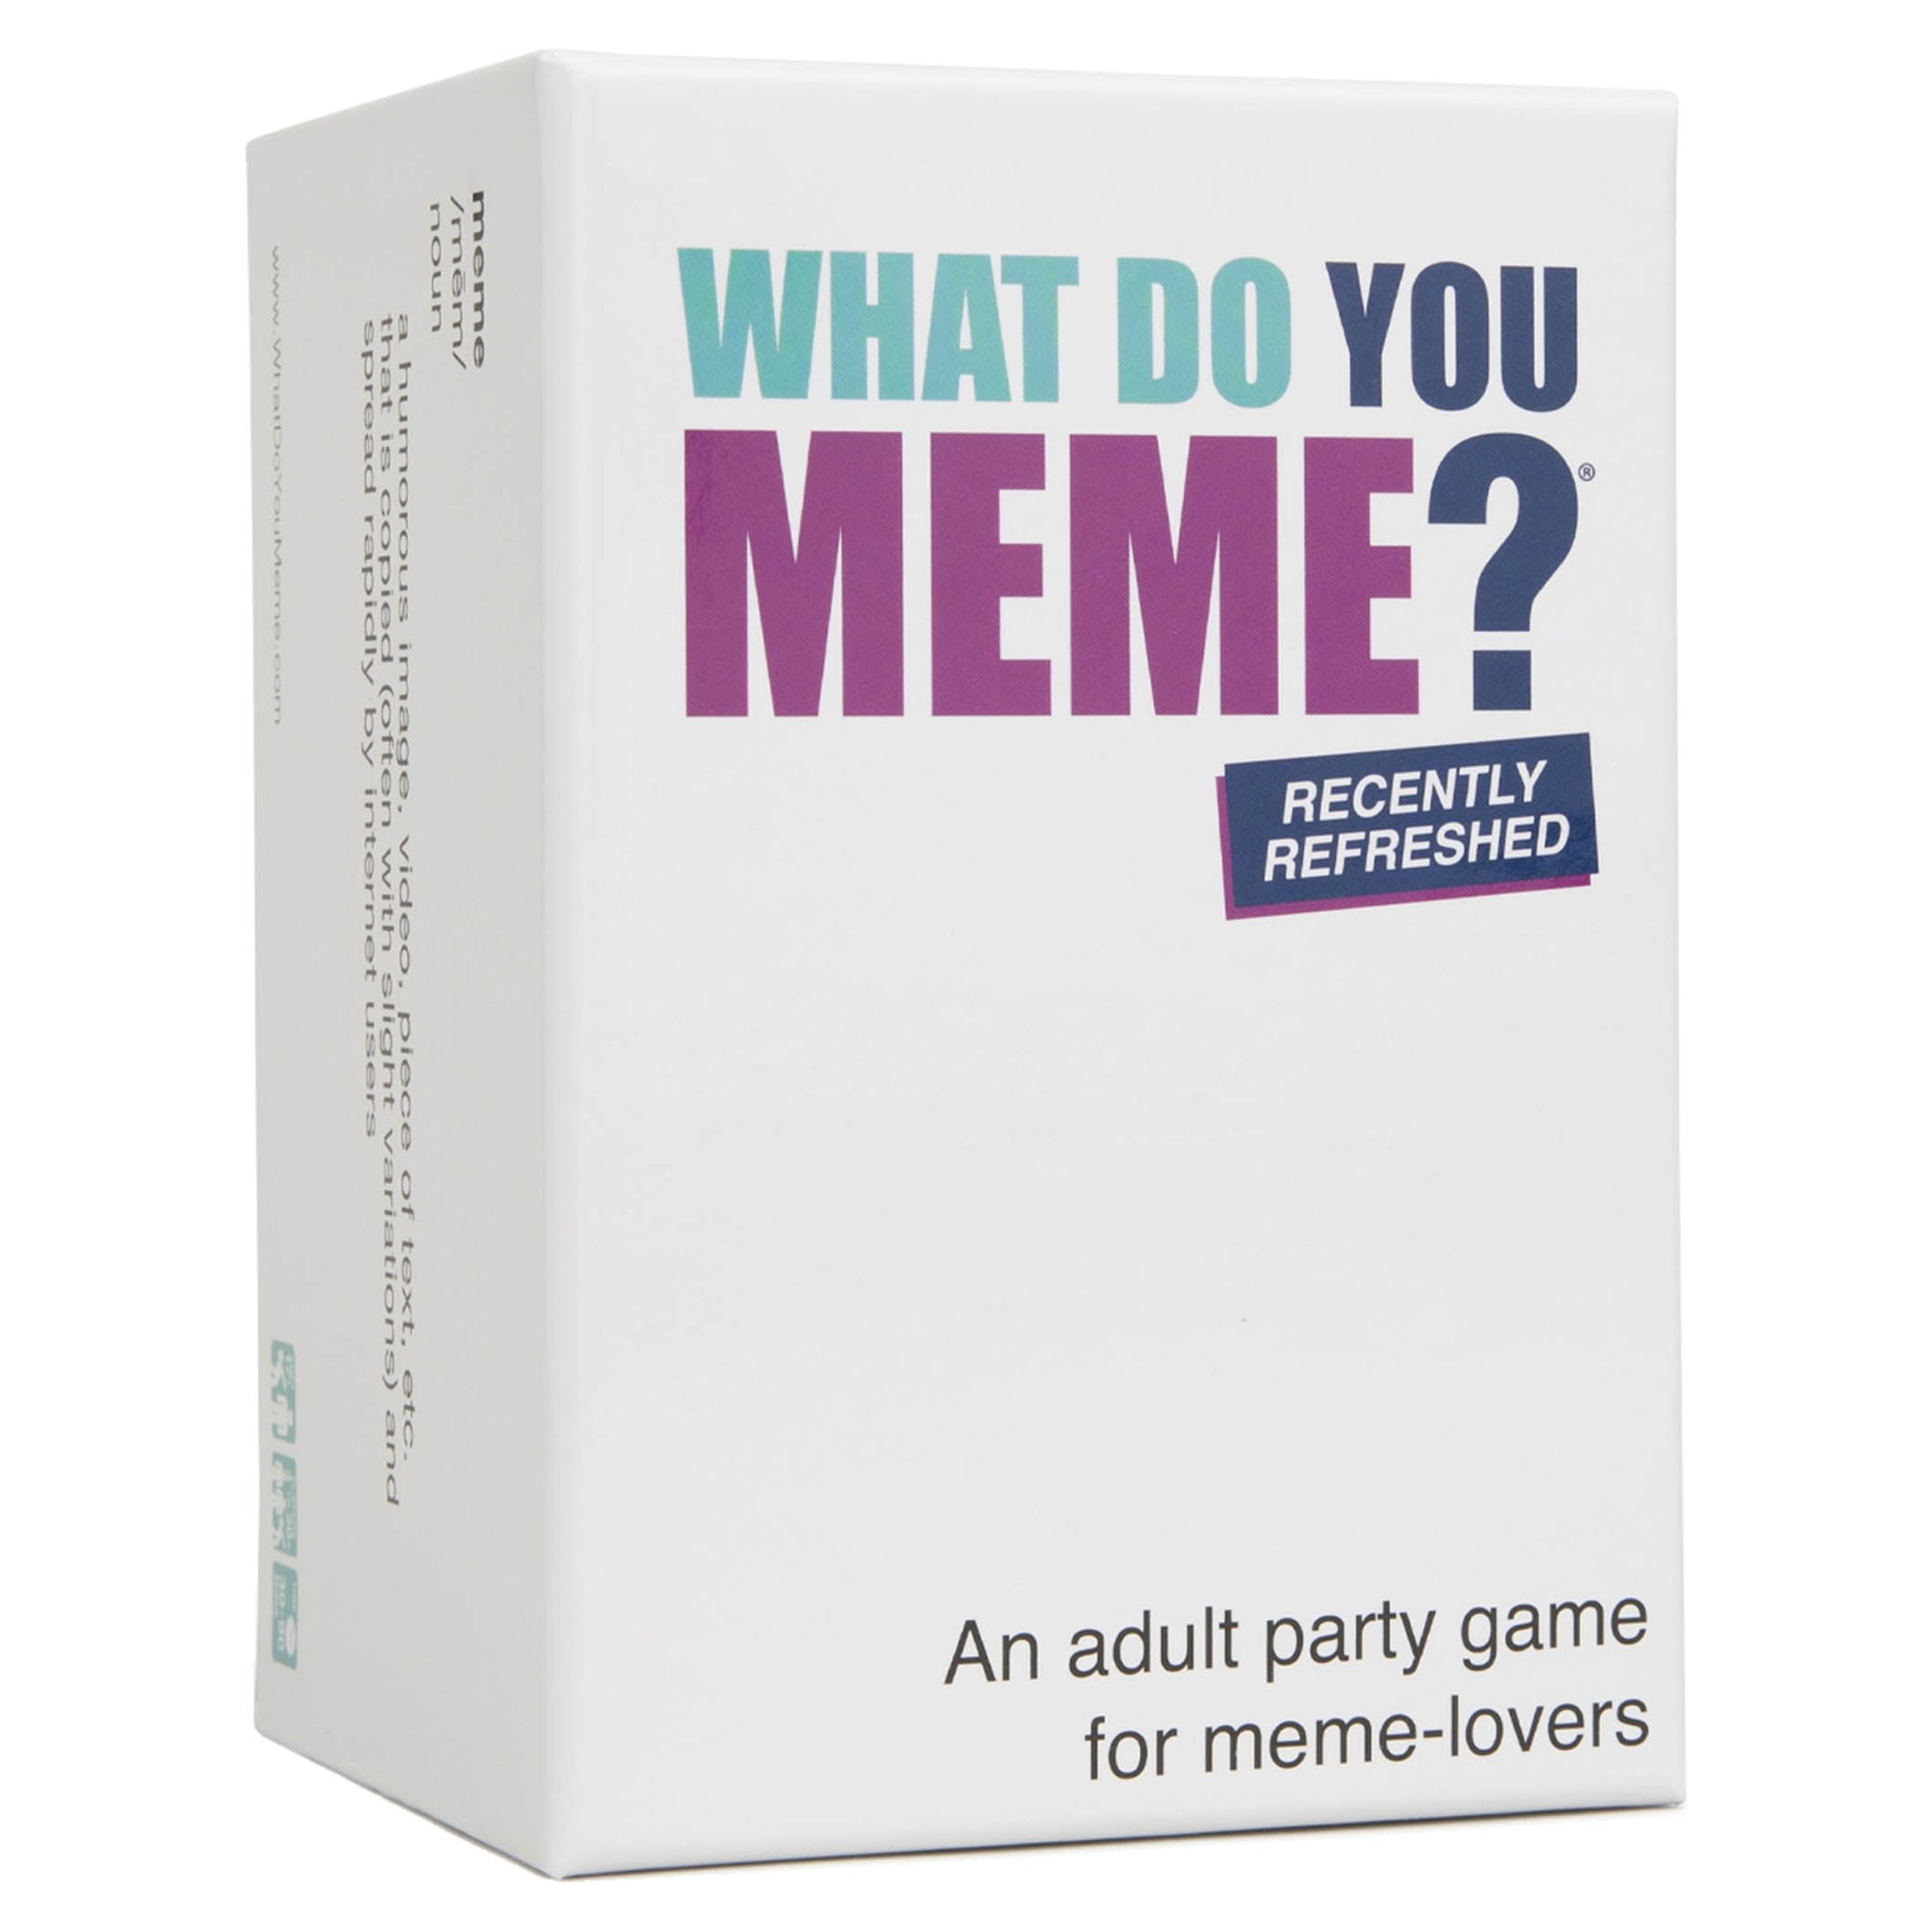 What Do You Meme? Game, meme game 